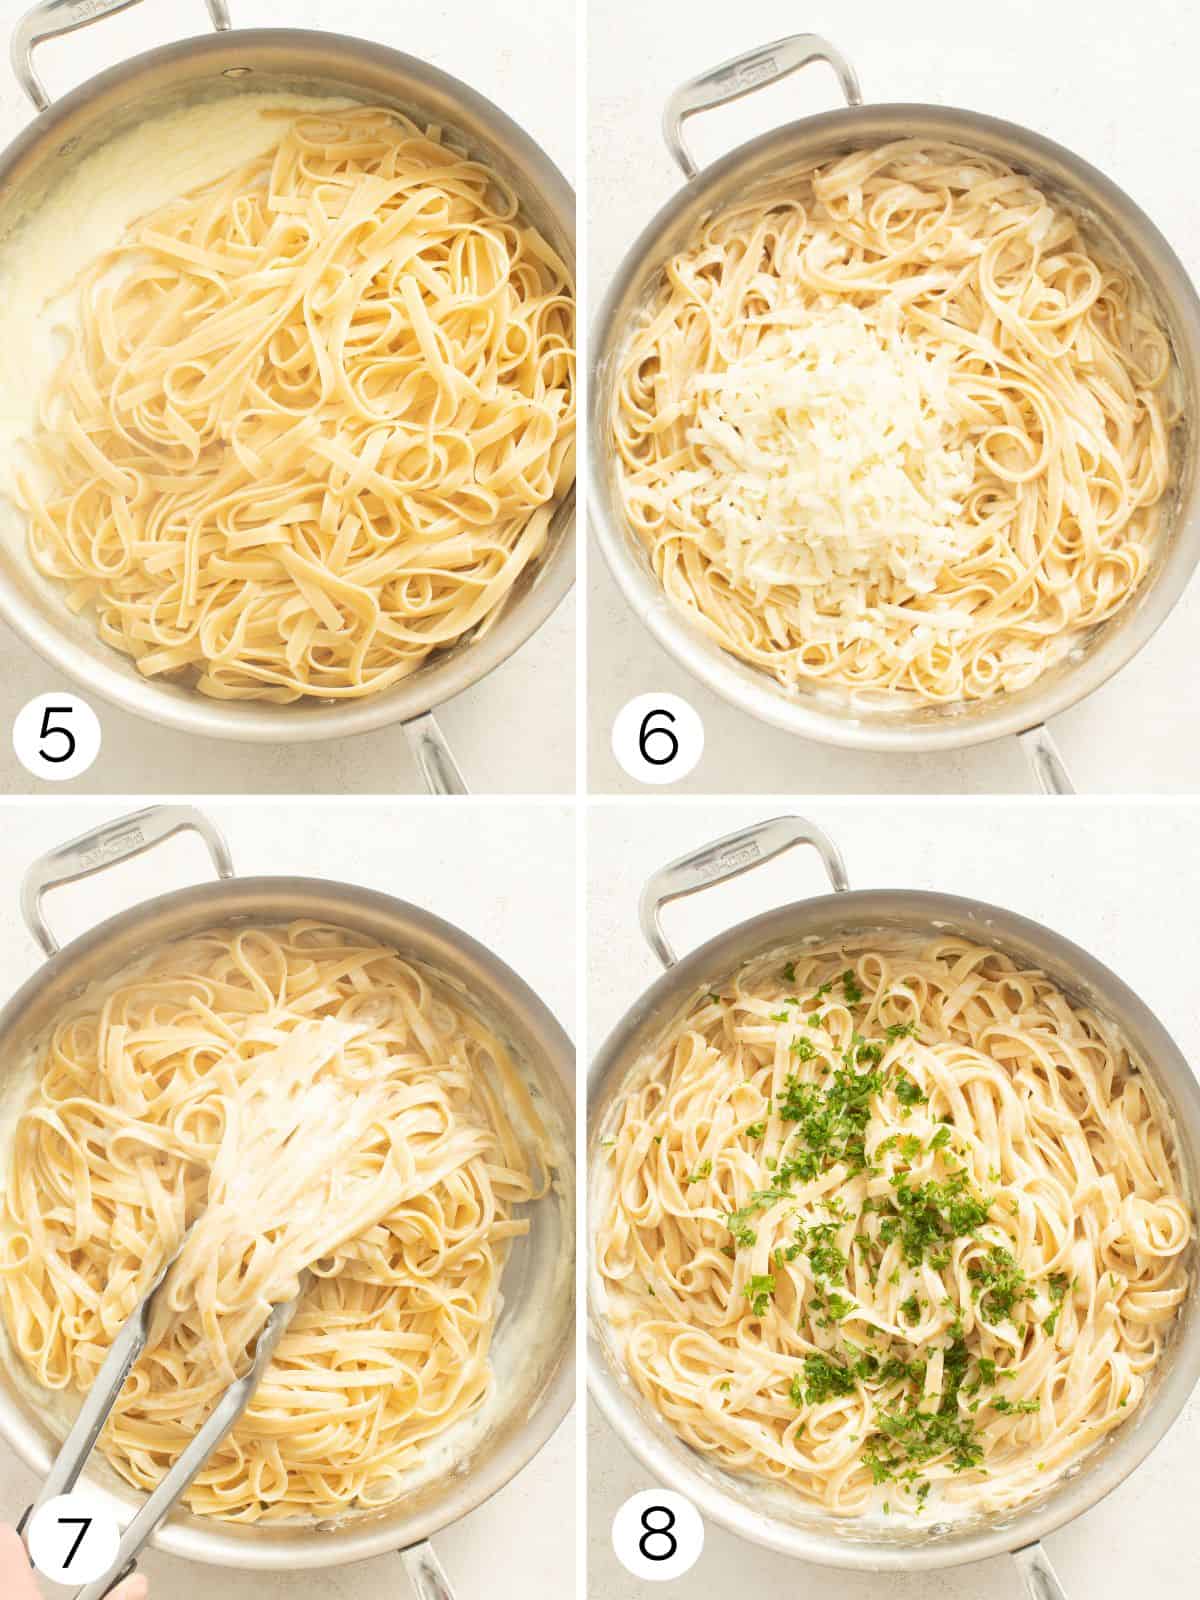 Step by step process of making a mozzarella alfredo sauce adding in pasta and mozzarella cheese.